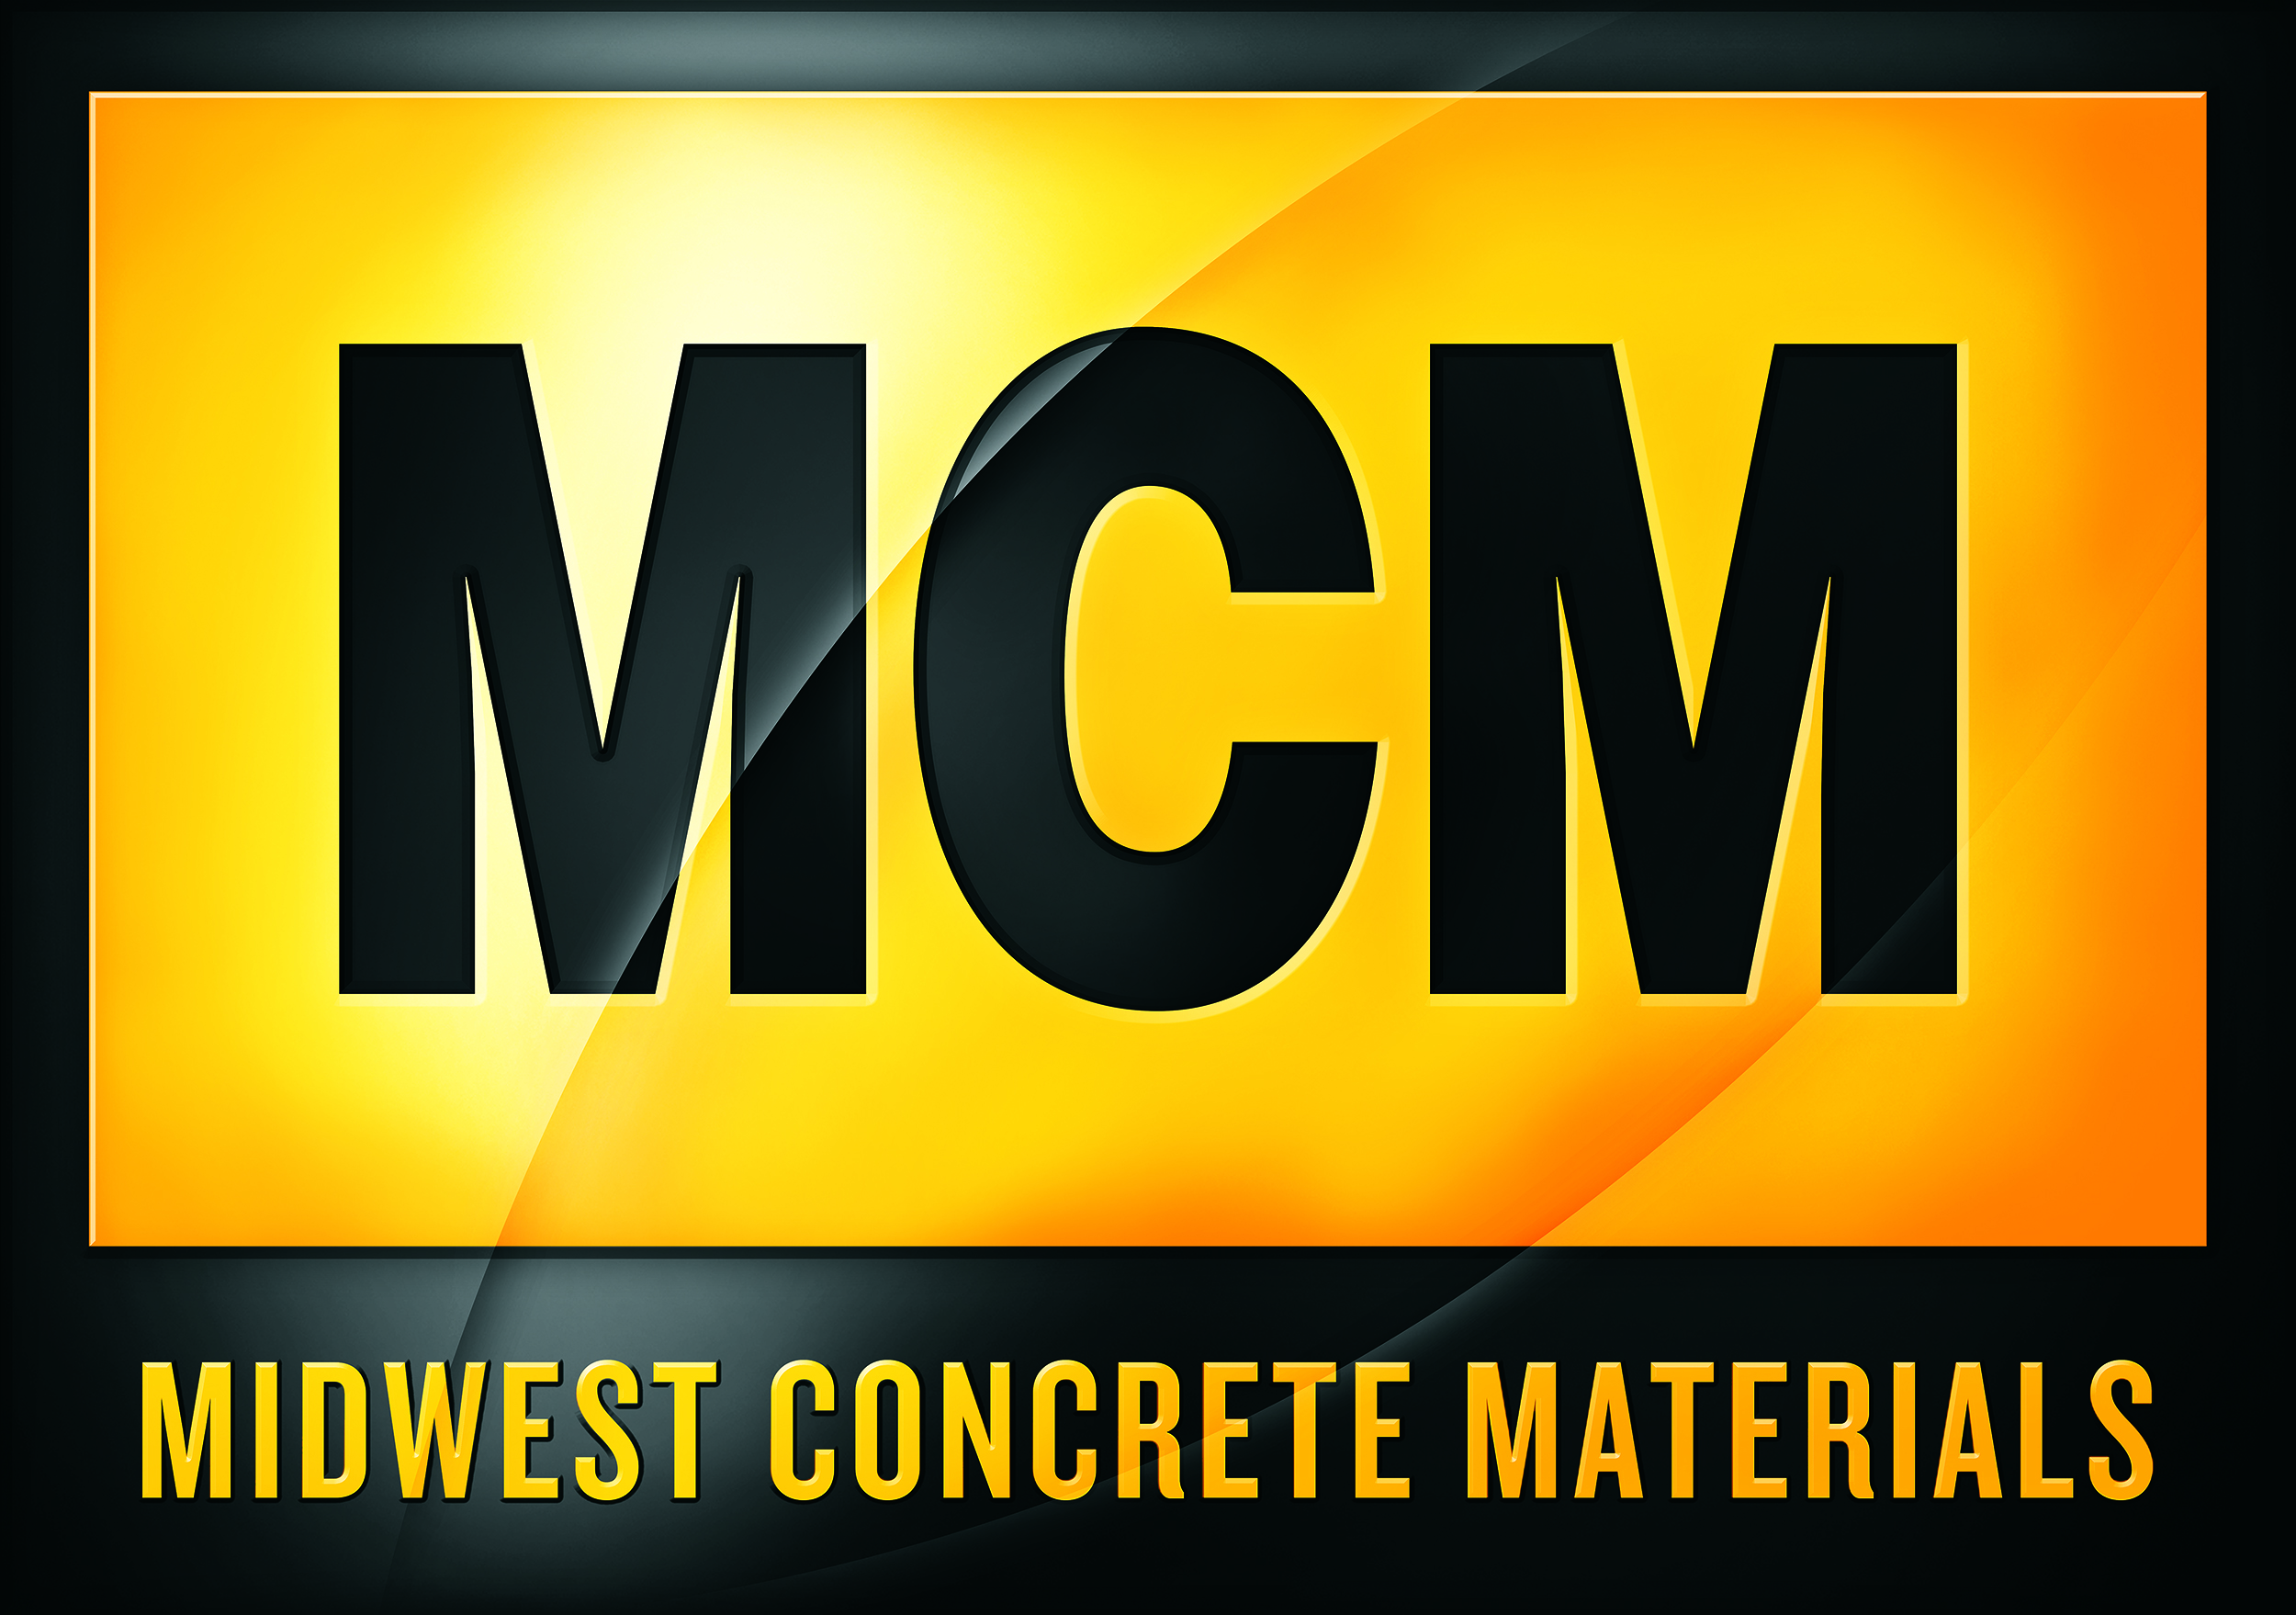 Midwest Concrete Materials, Inc.